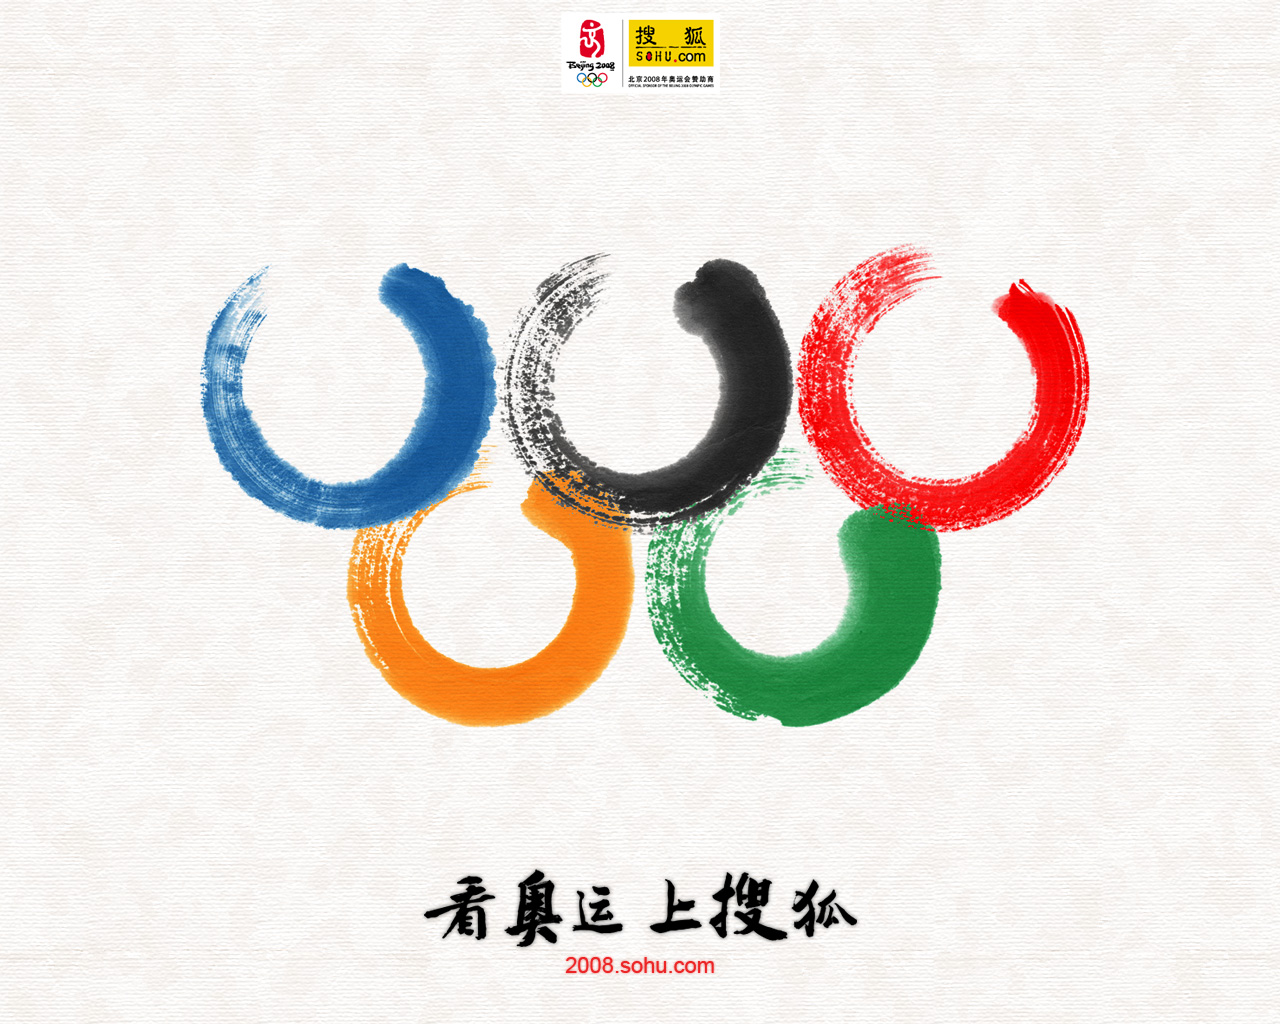 Previous, Sport - Beijing 2008 - Olympic rings 2008 wallpaper